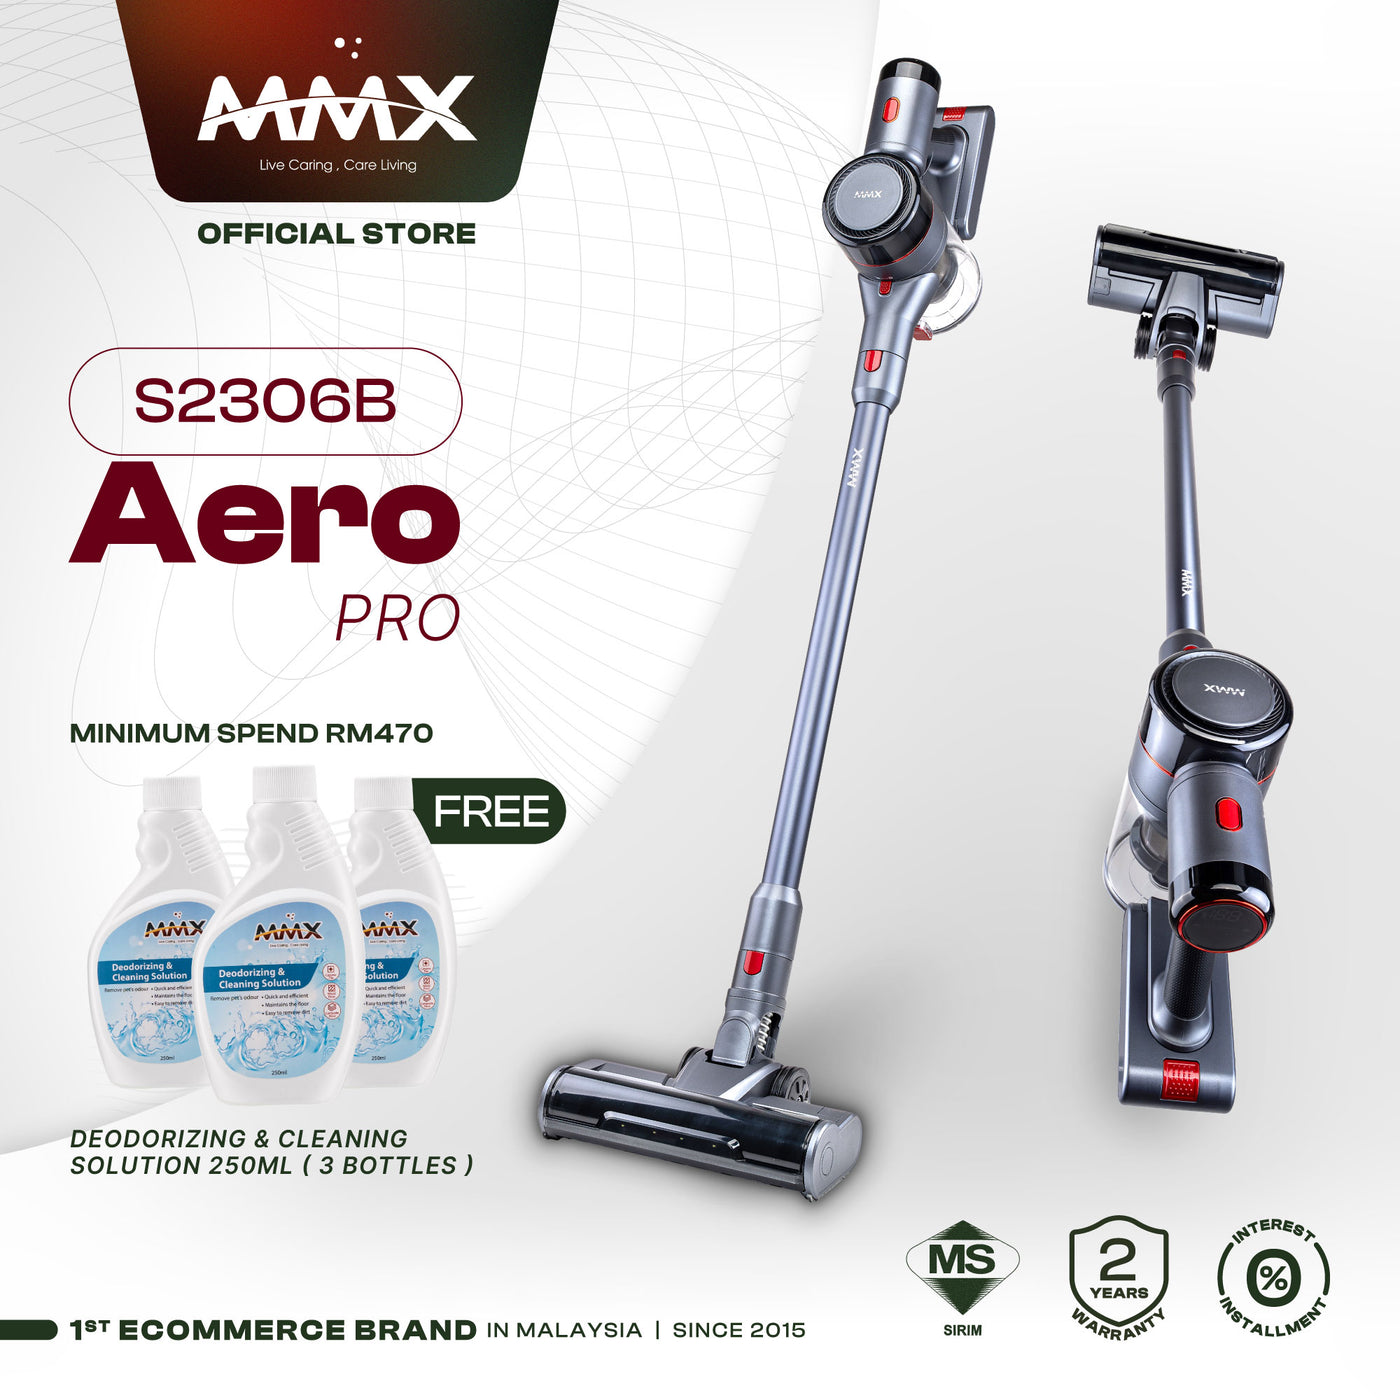 Aero Pro S2306B Wet & Dry Cordless Vacuum Cleaner